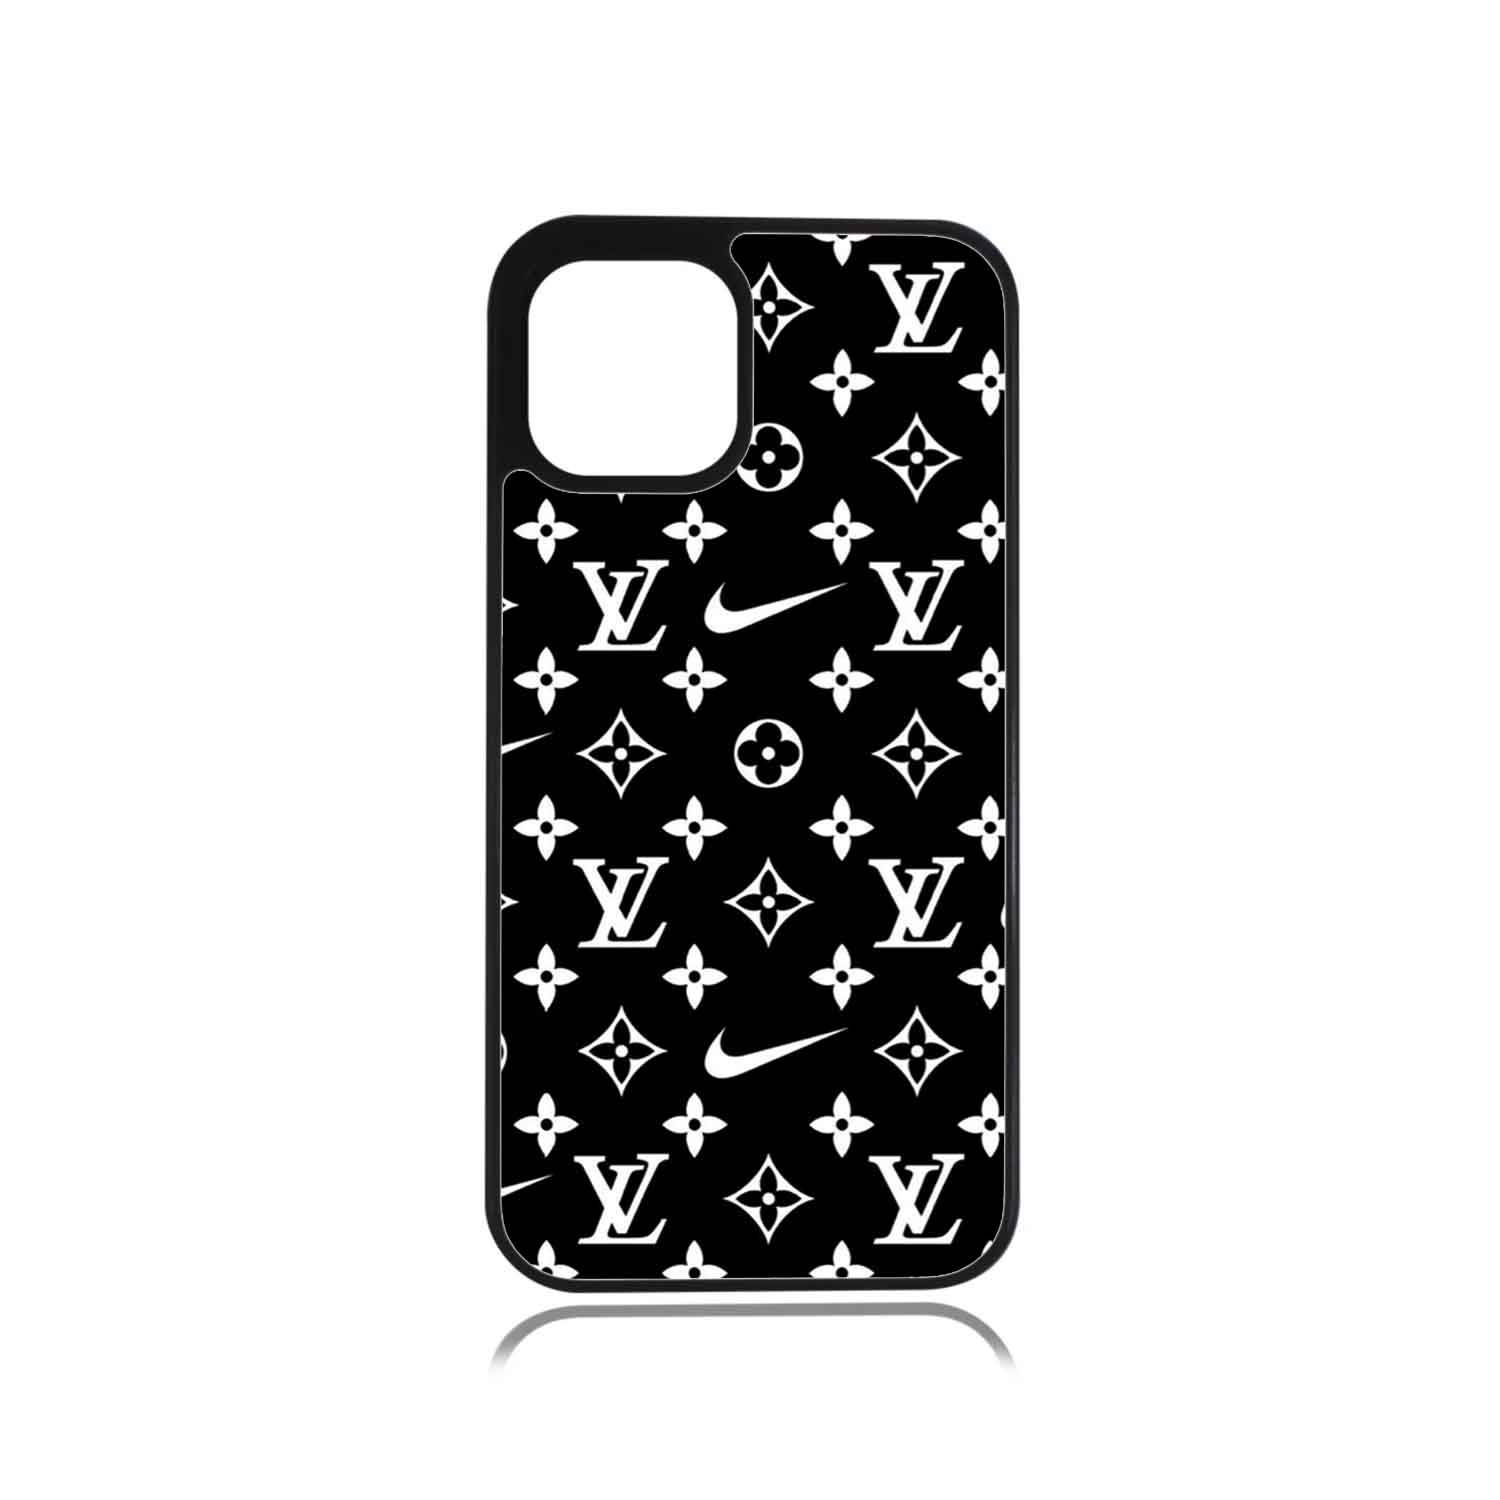 Funda Para iPhone 12 Pro - Louis Vuitton Logo